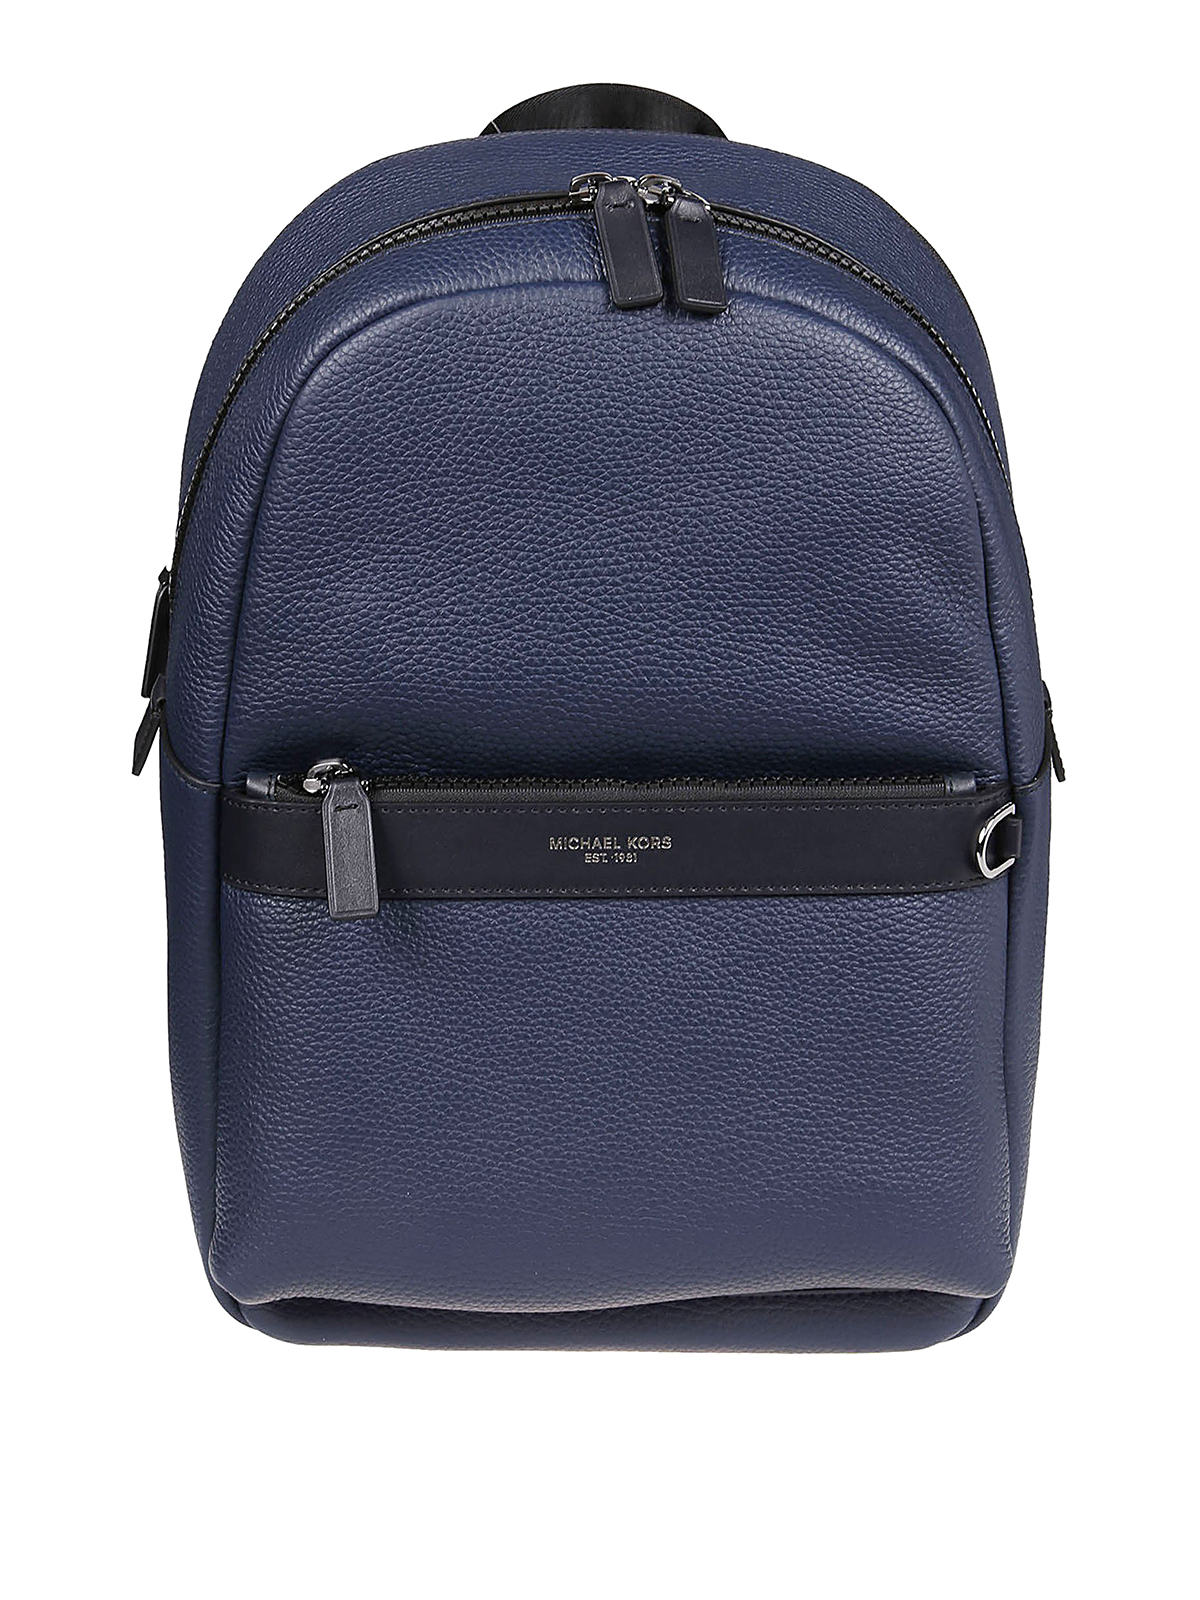 Backpacks Michael Kors - Greyson blue pebble leather backpack ...